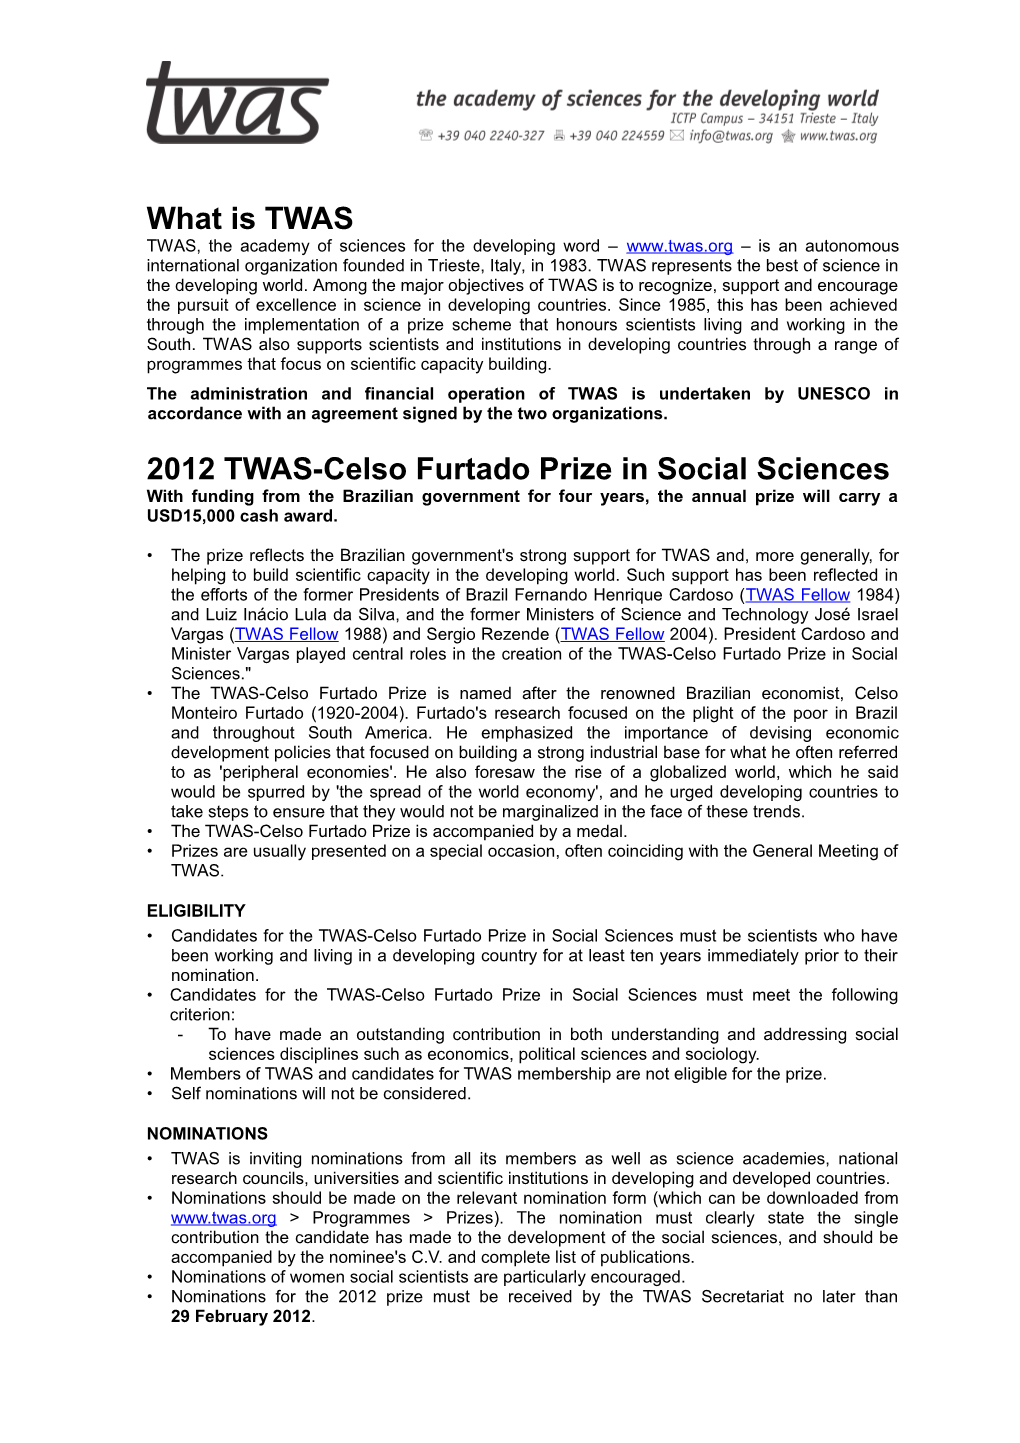 TWAS Prizes - General Information 2009